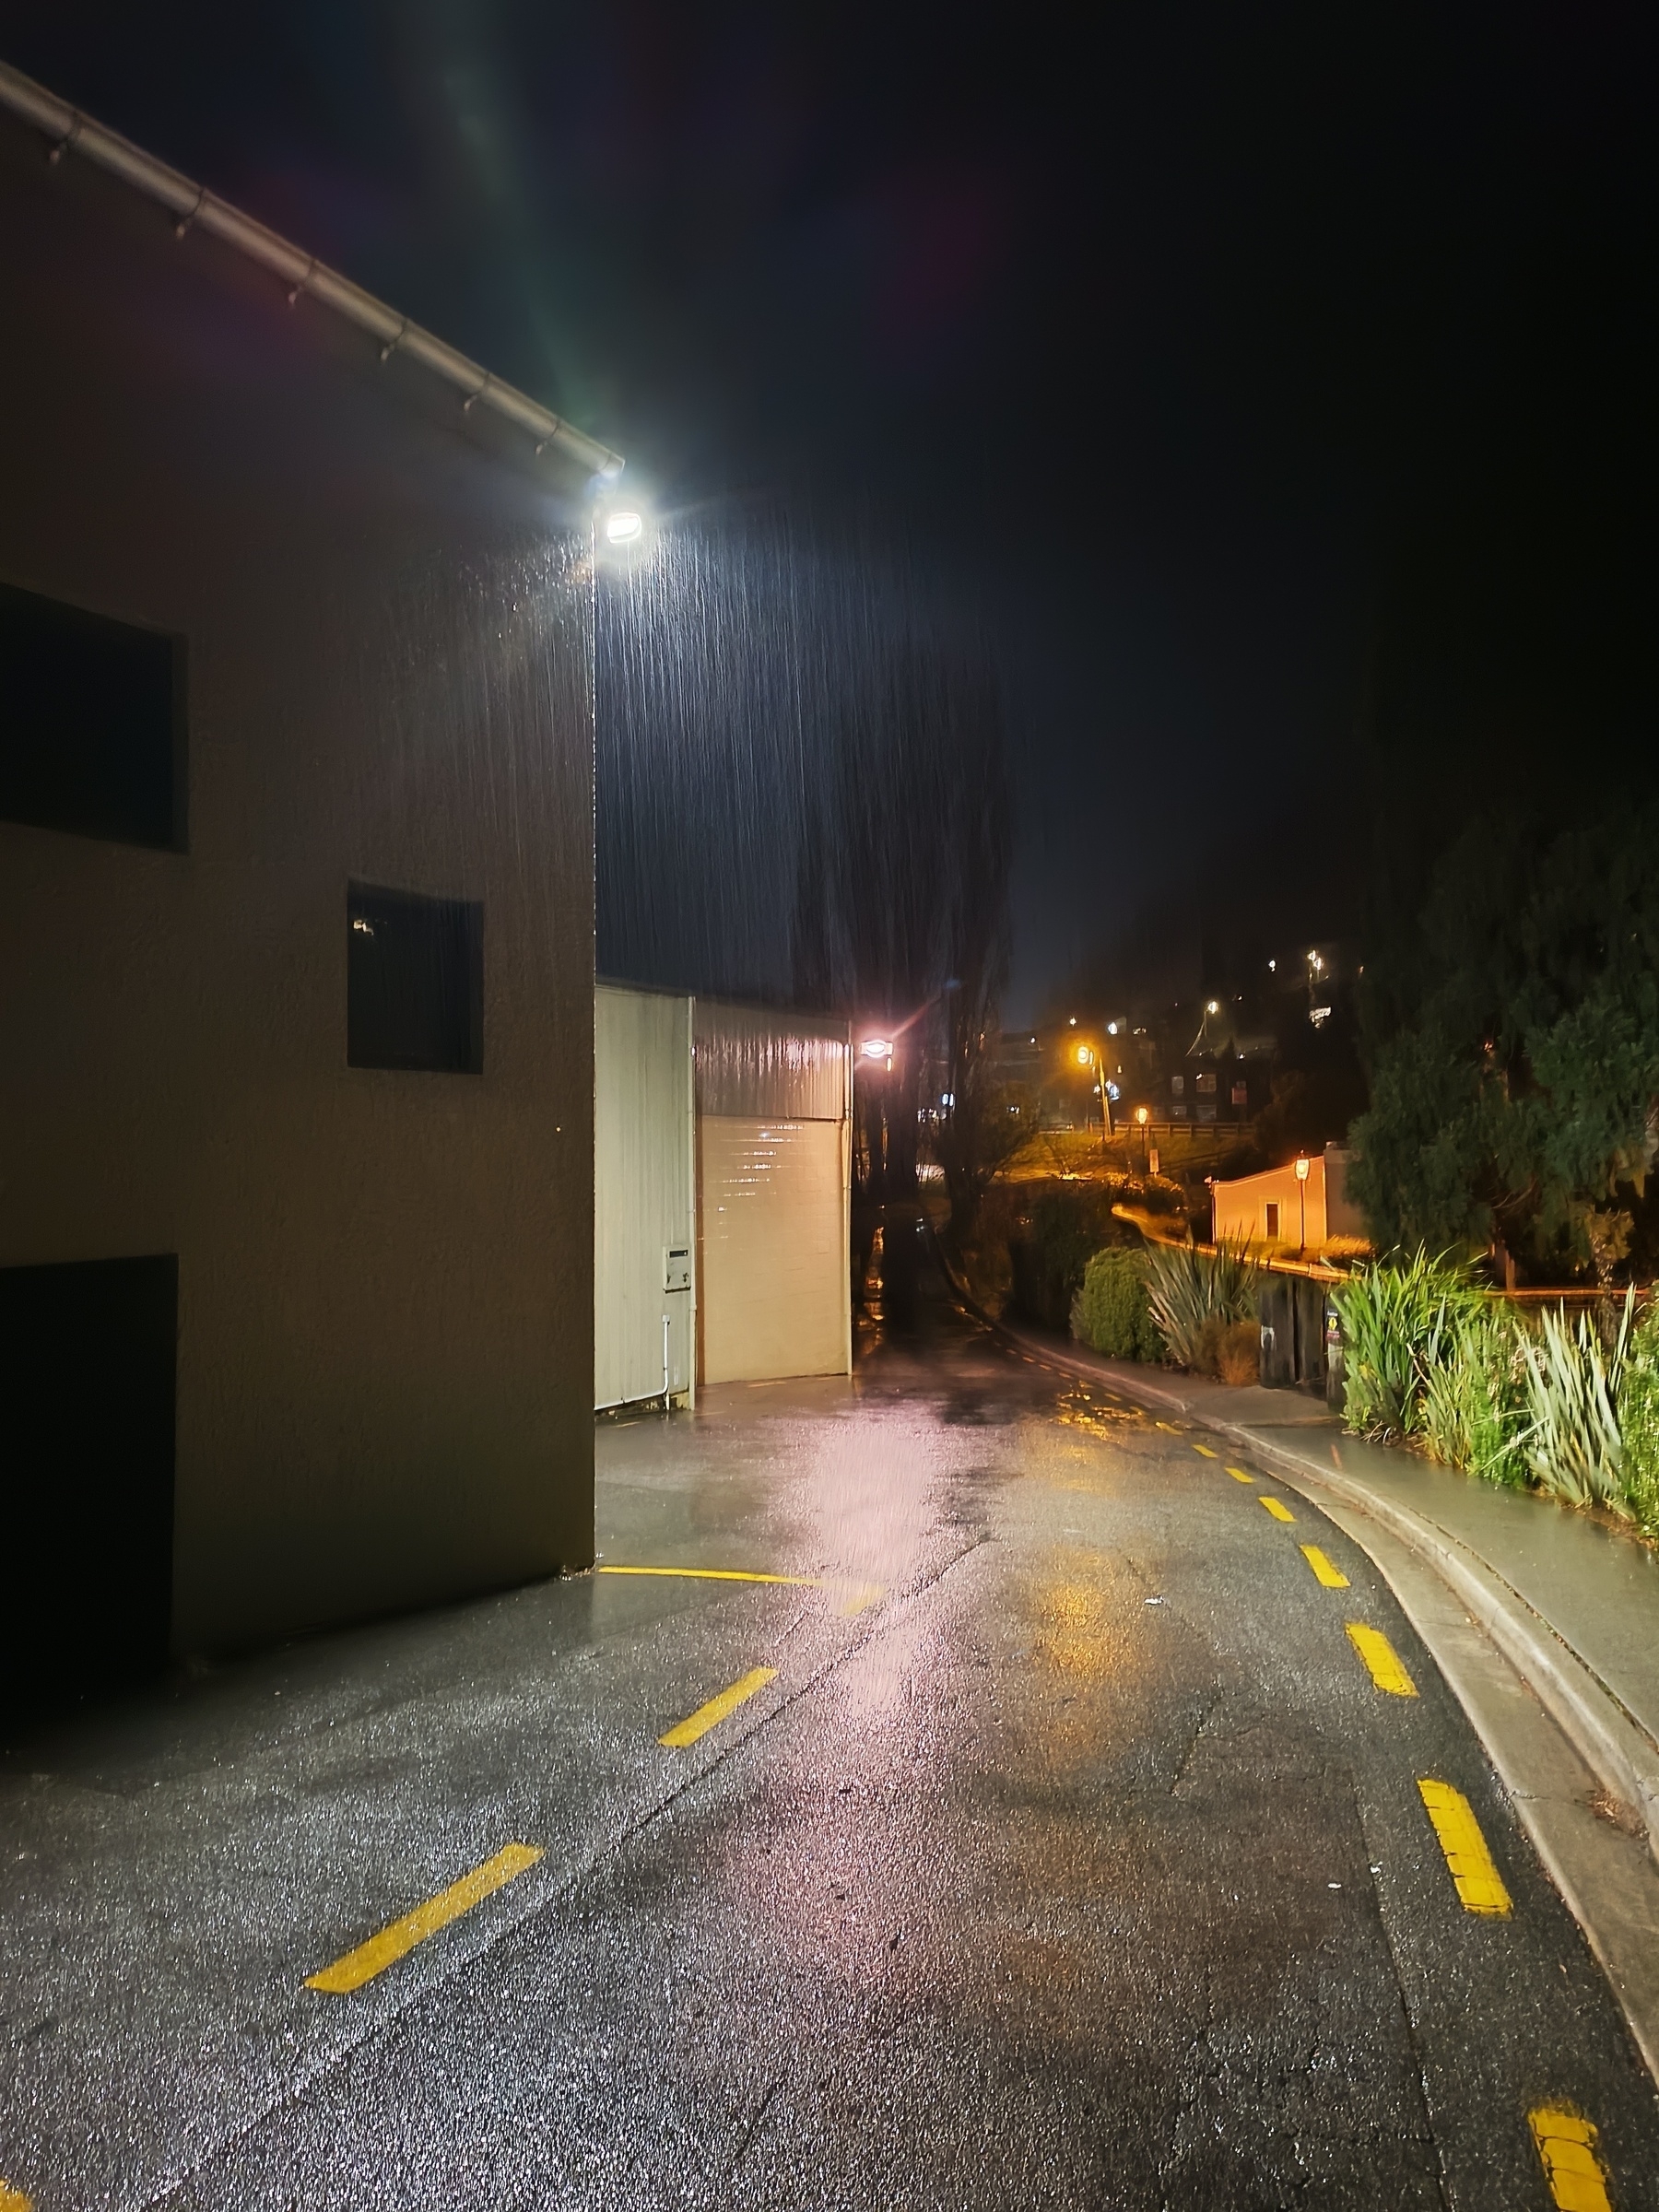 Rain illuminated by lights on corner of buildings